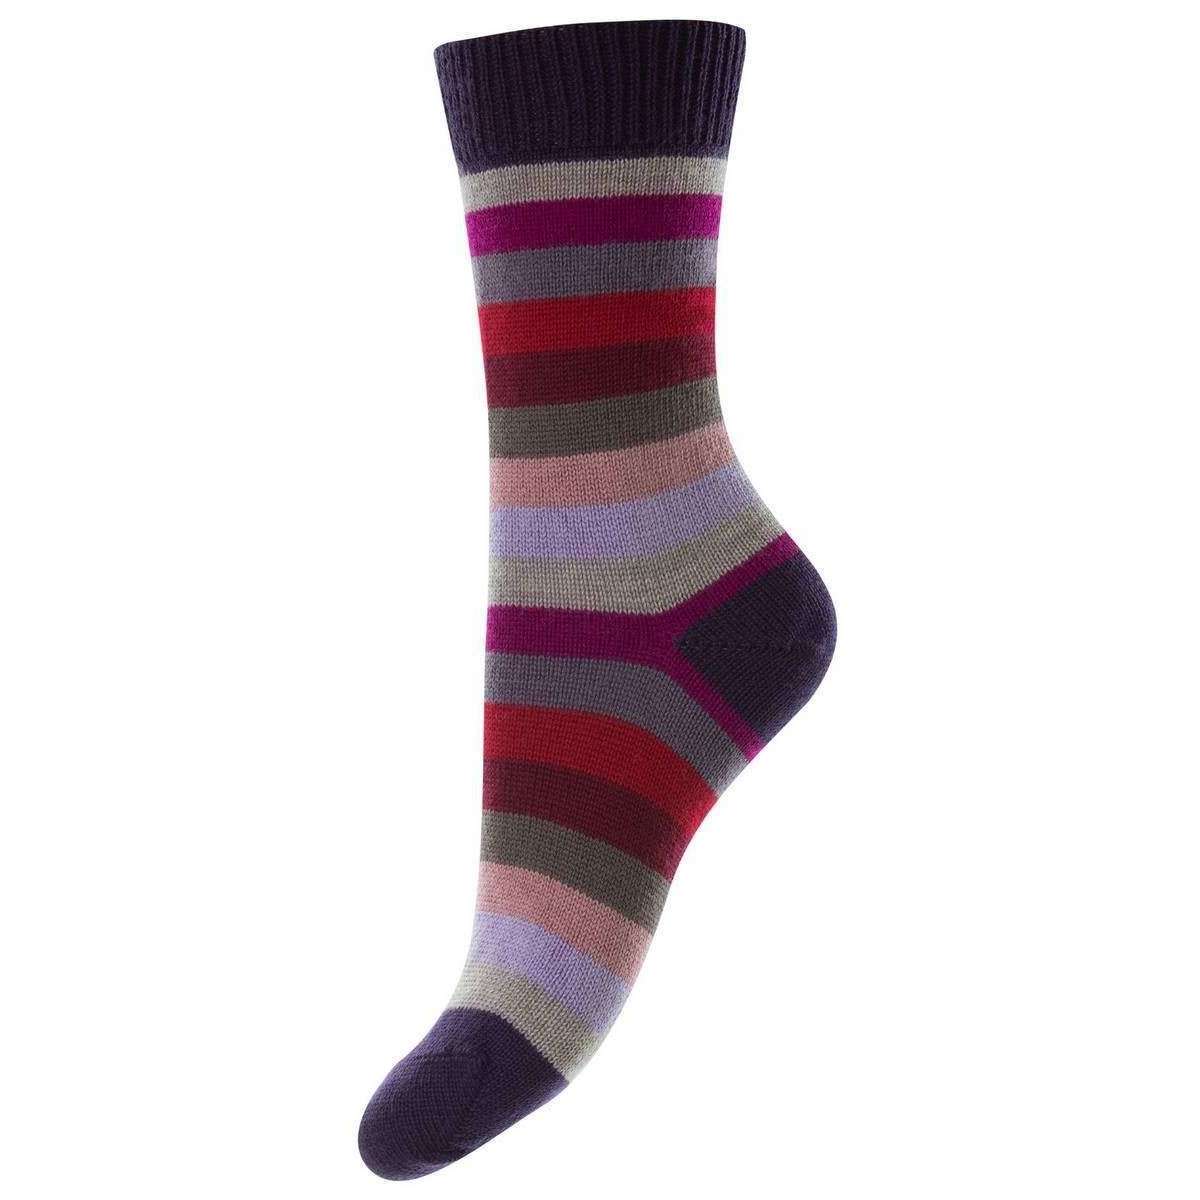 Pantherella Suzannah Multi Stripe Merino Wool Socks - Blackberry Purple/Pink